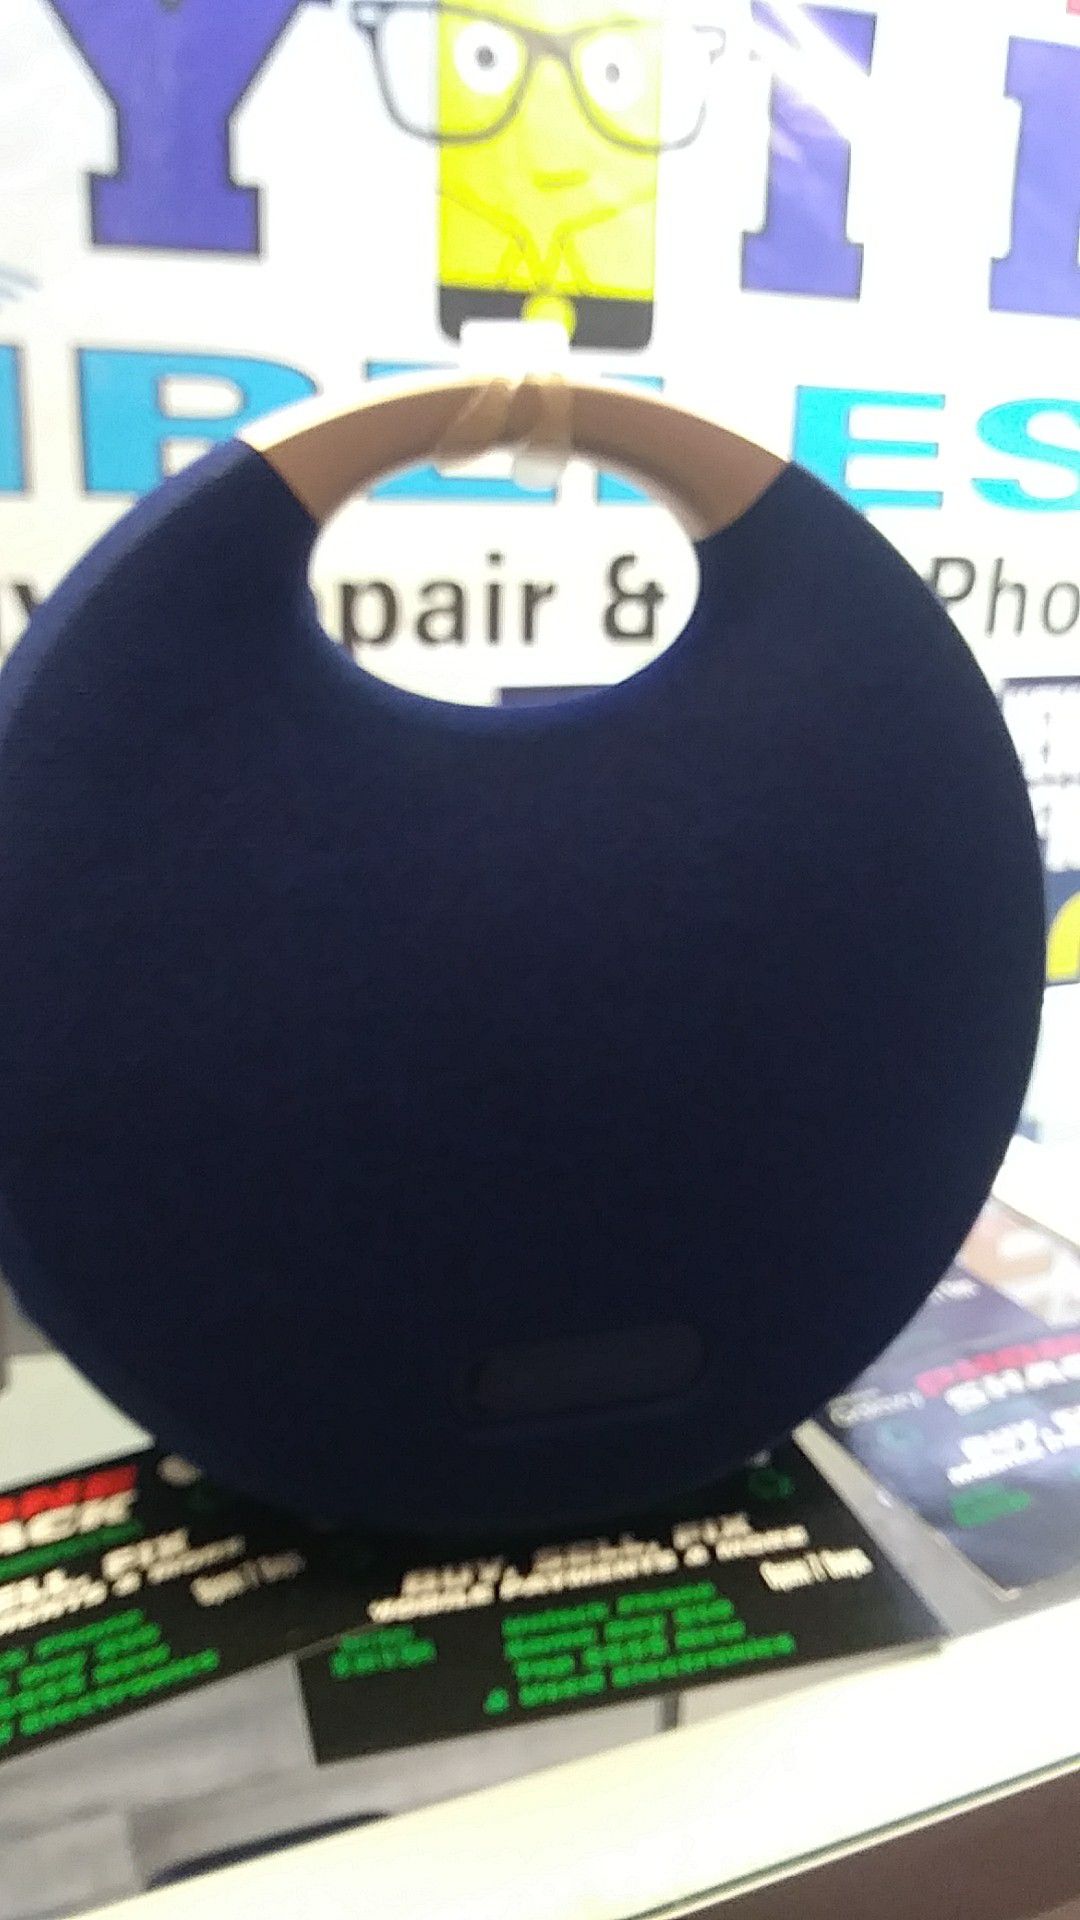 Blue tooth speaker model harman/kardon